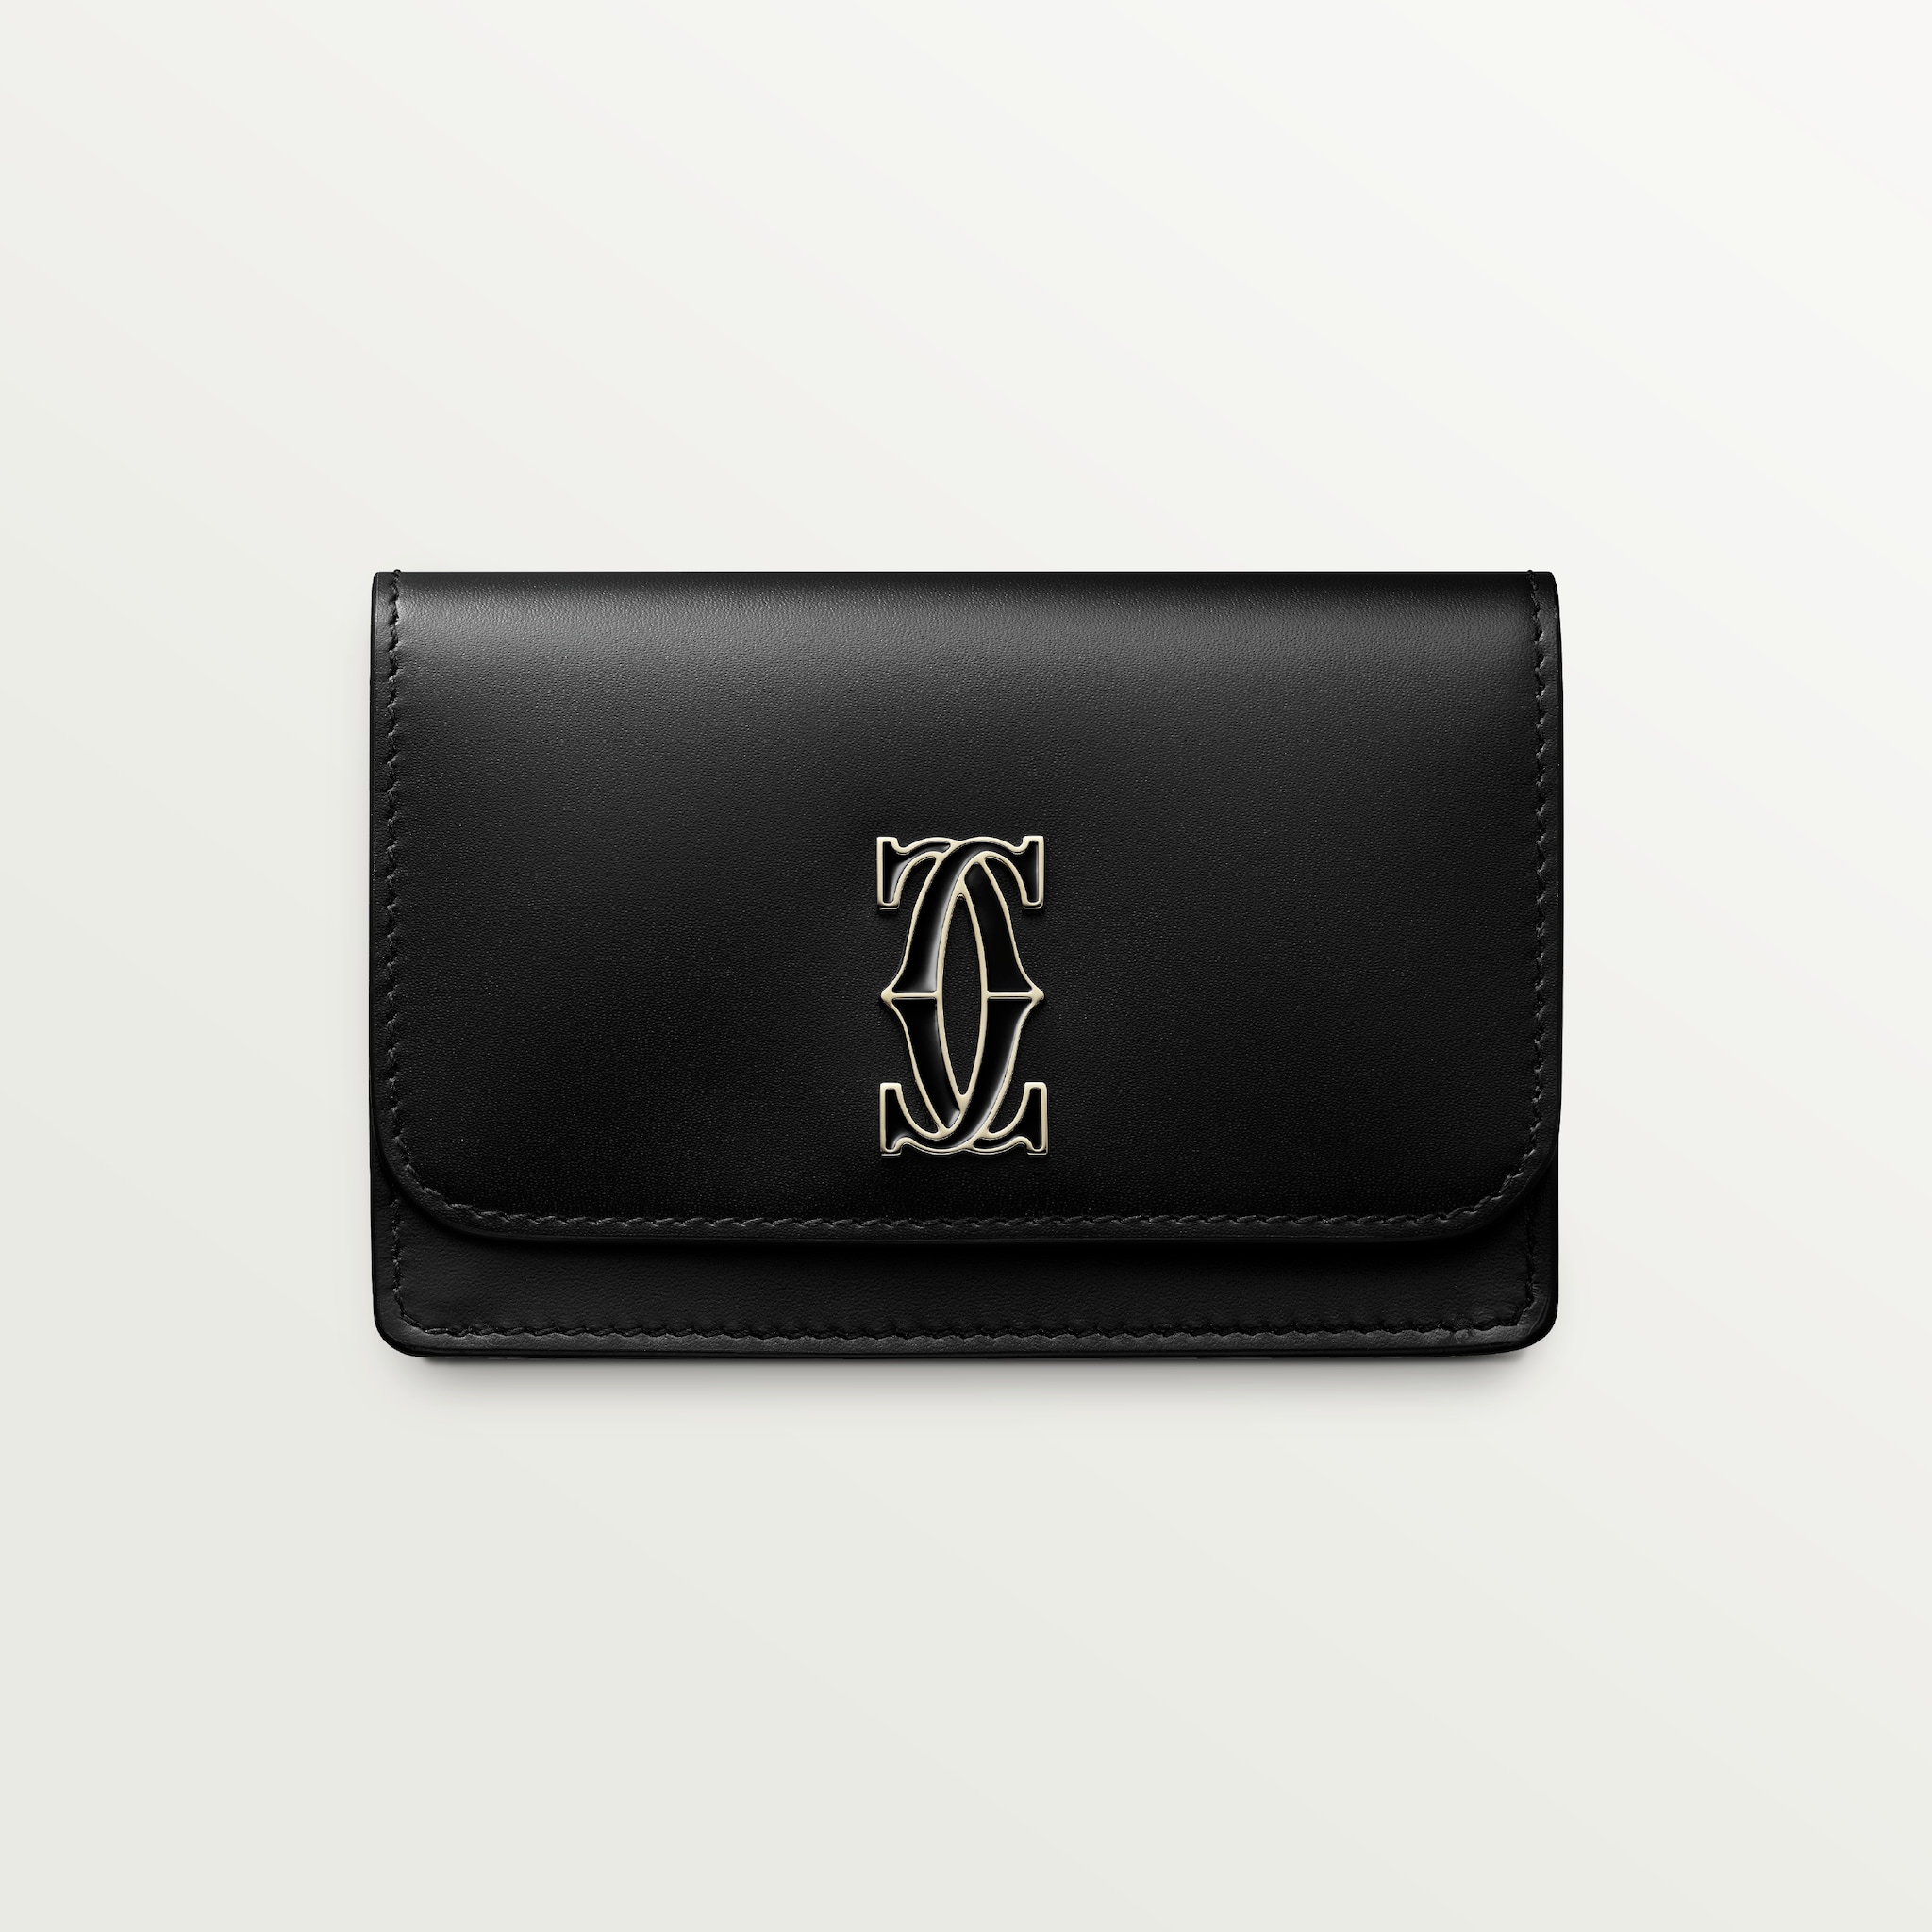 Multi-card holder with flap, C de CartierBlack calfskin, gold and black enamel finish